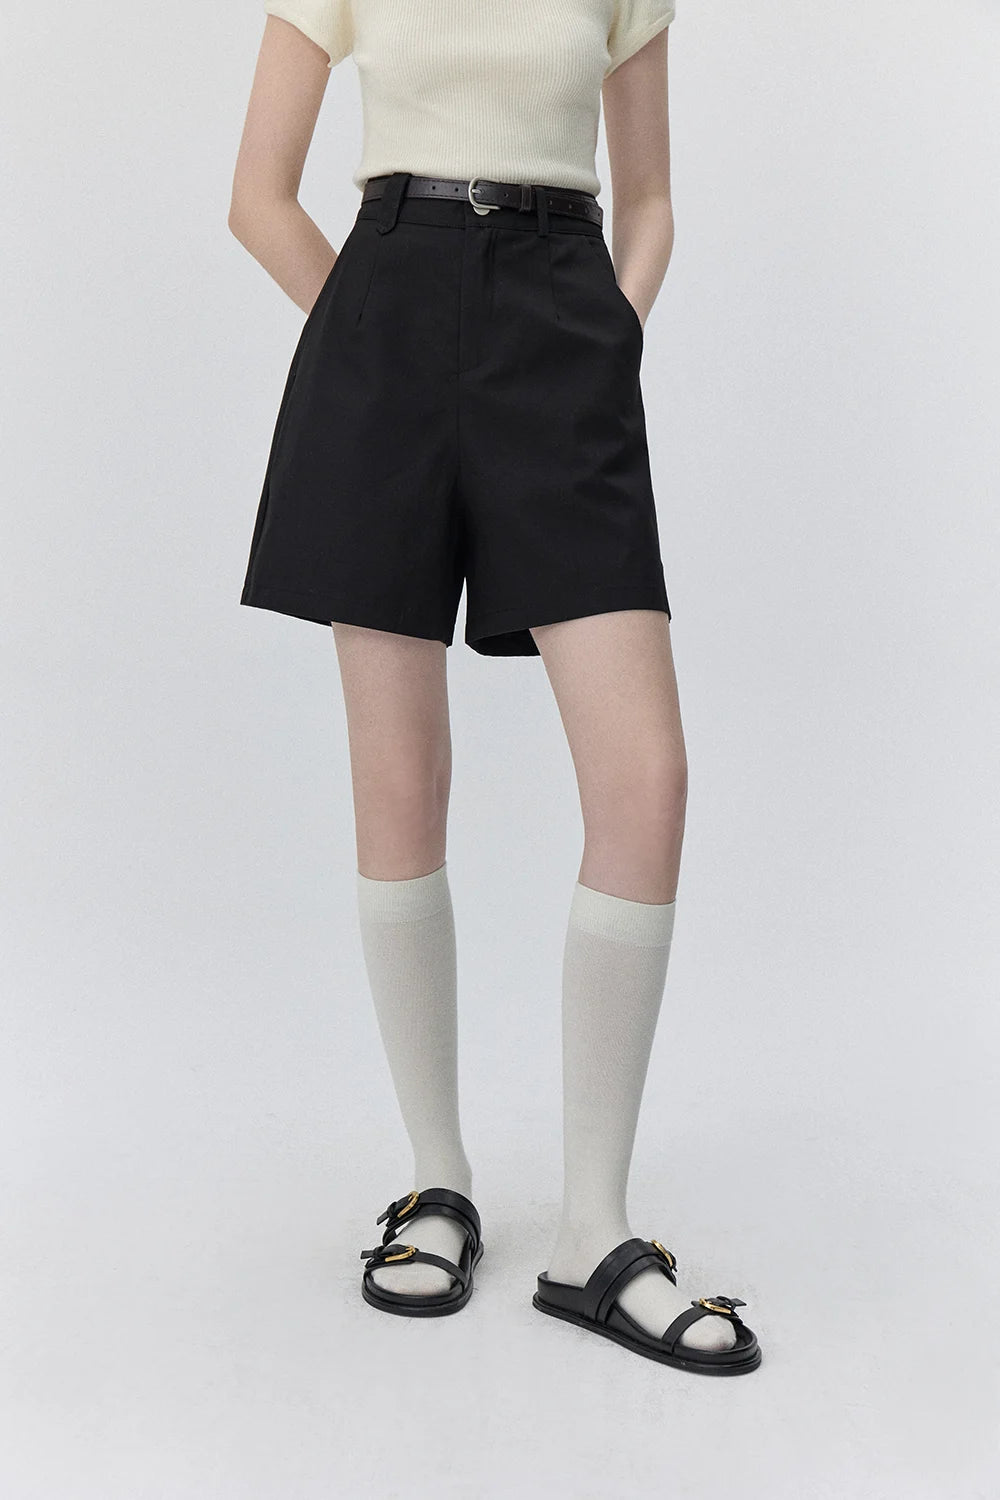 Moderne High-Waist-Shorts mit schlankem Gürtel – Urban Trendsetter